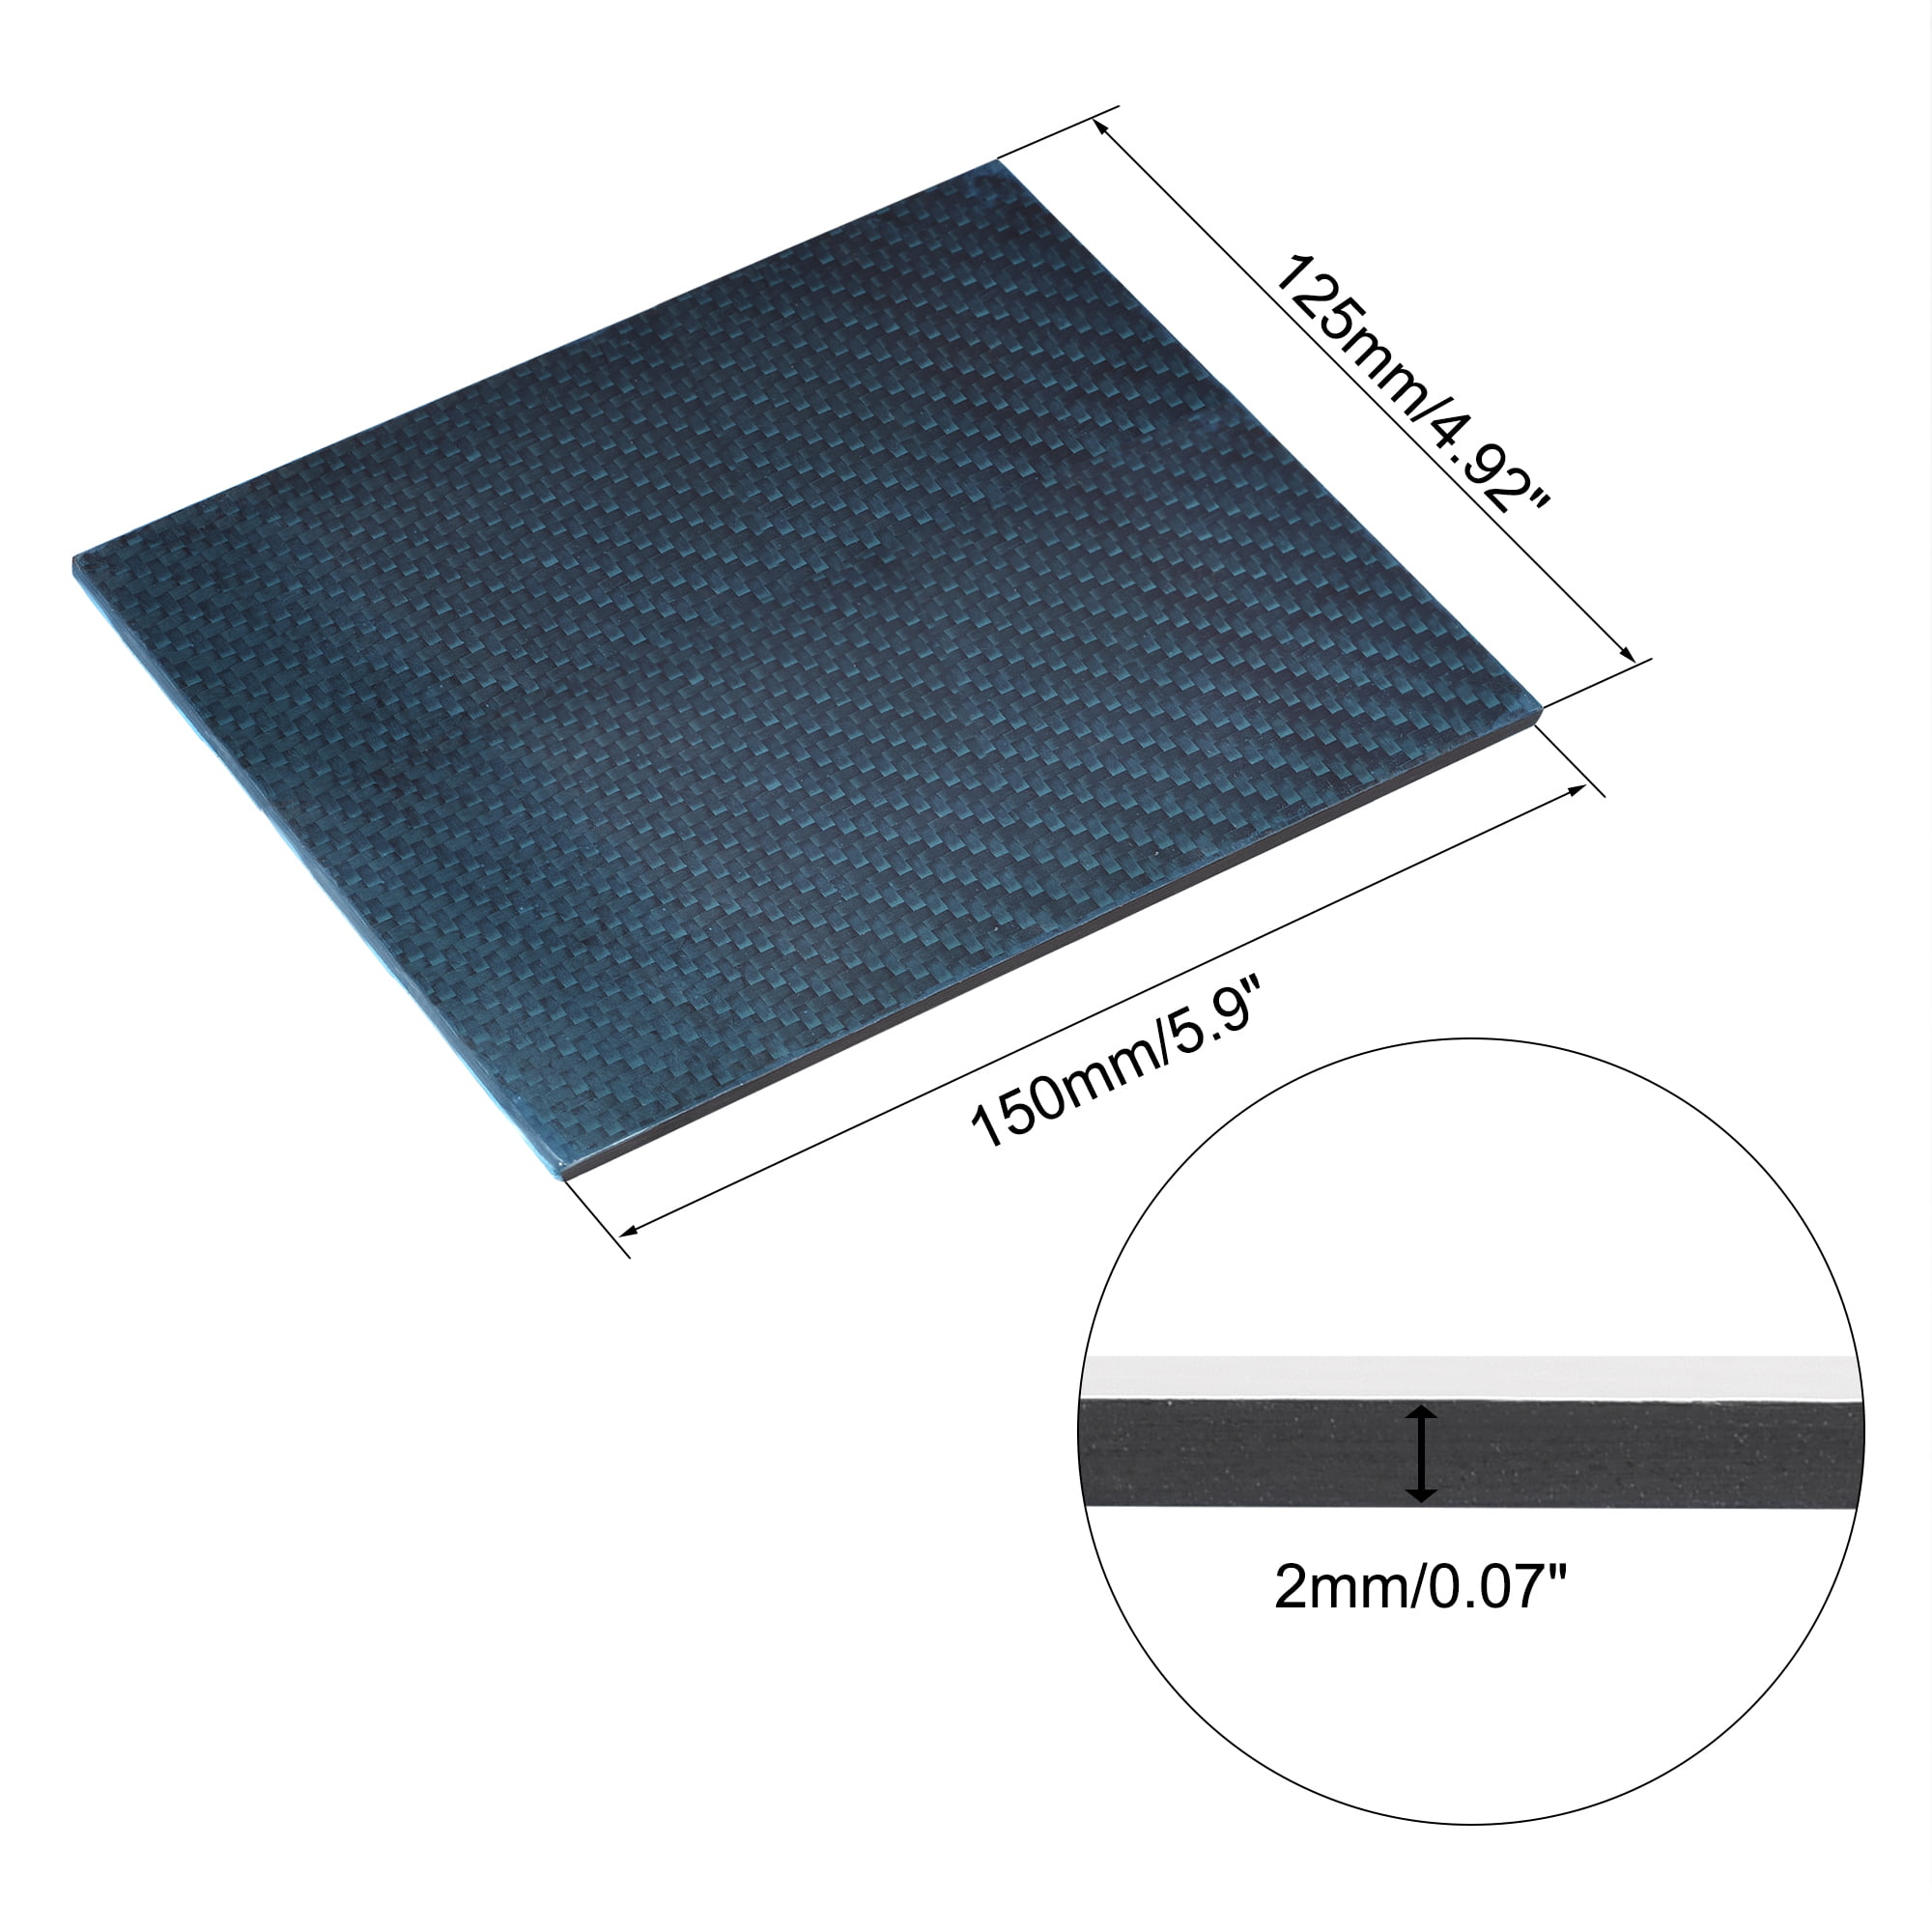 uxcell Carbon Fiber Plate Panel Sheets 150mm x 125mm x 2mm Carbon Fiber Board Twill Matte 